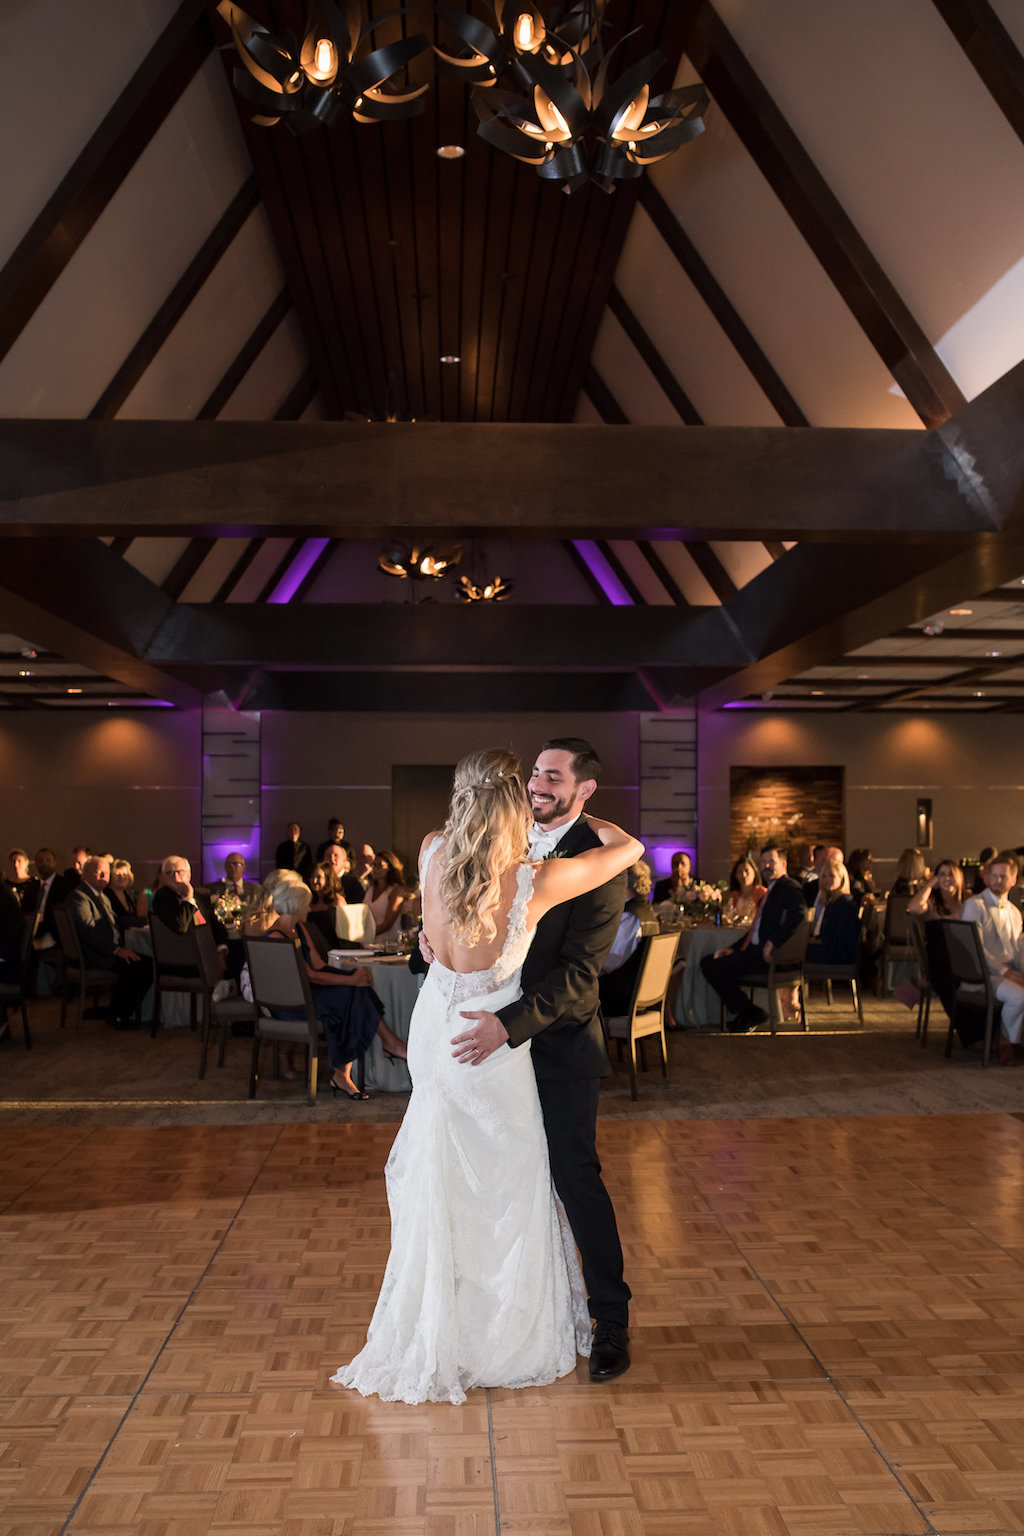 Tampa Bay Bride and Groom First Dance Wedding Reception Portrait | Sarasota Wedding Venue Marie Selby Botanical Gardens